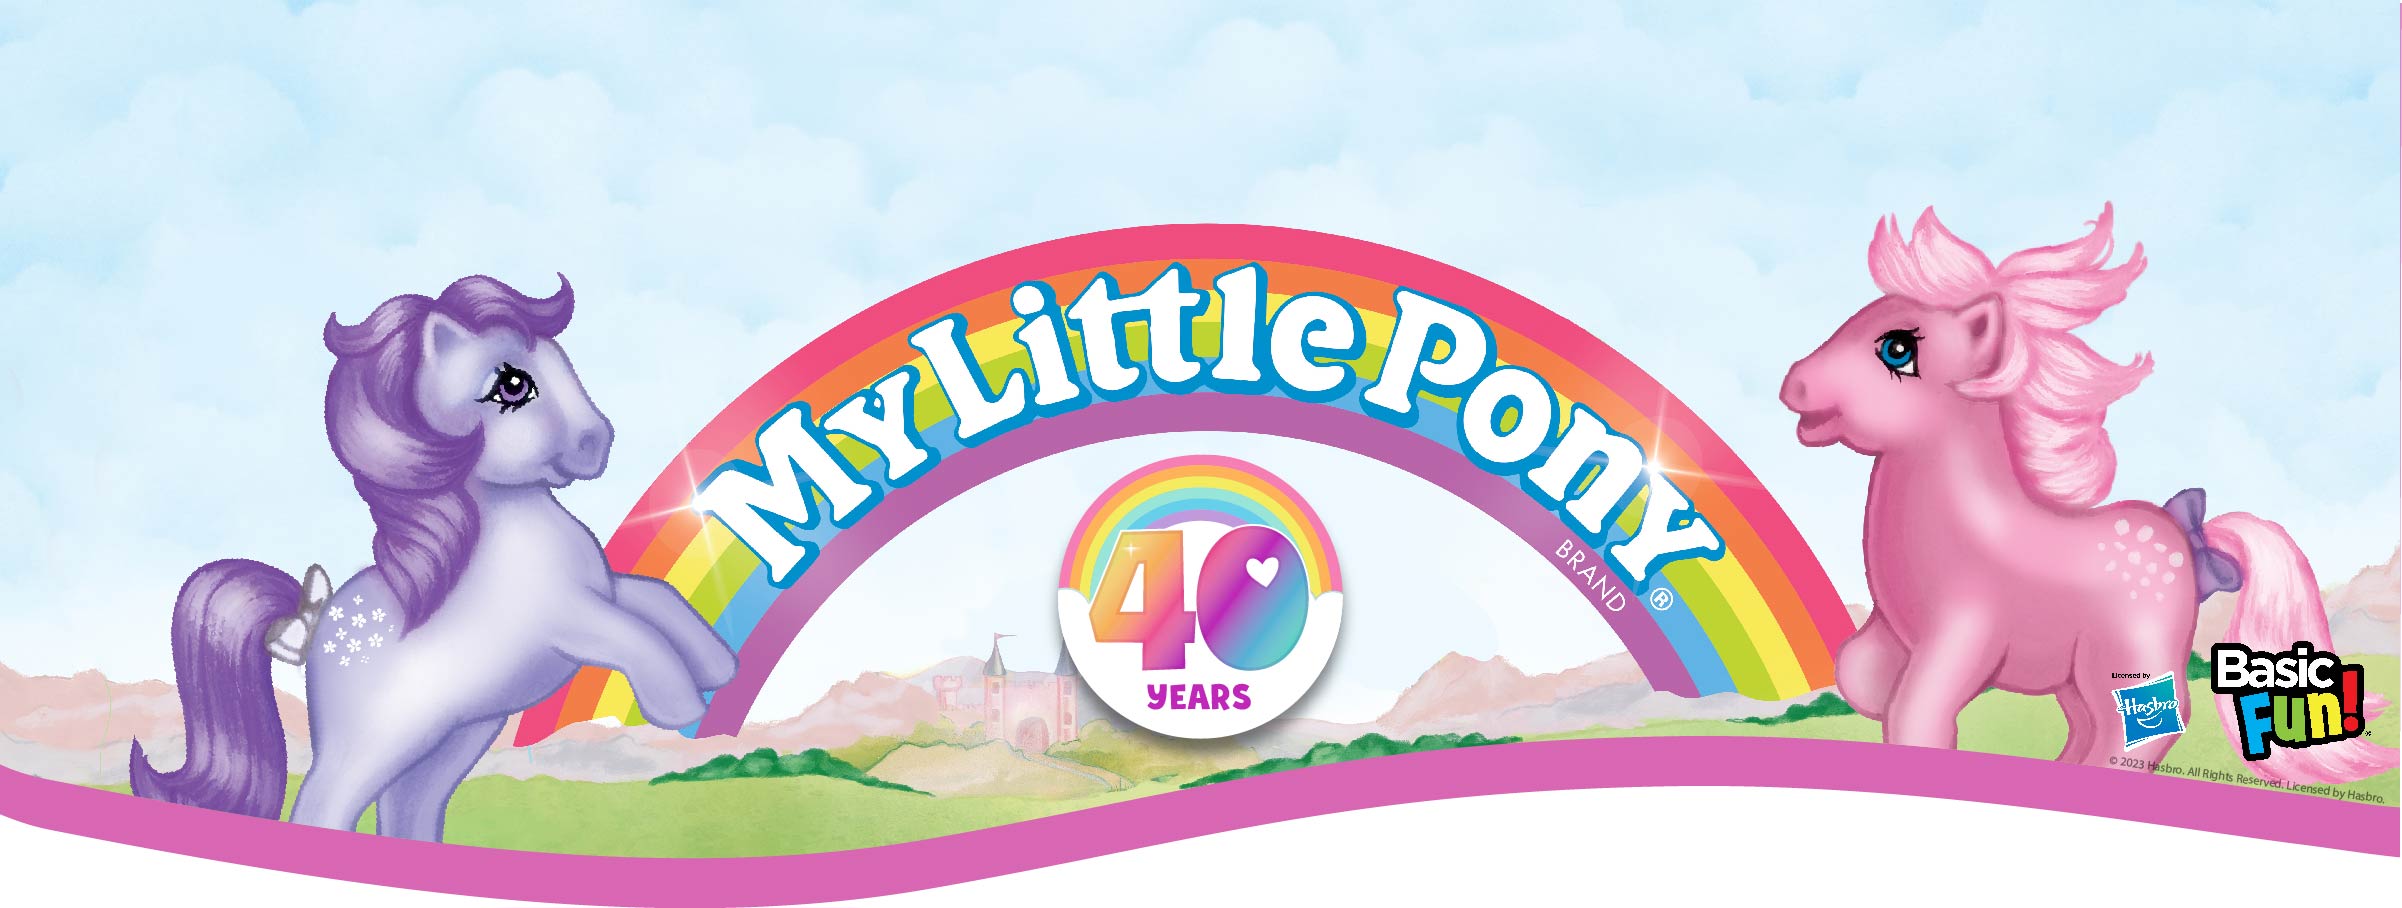 My Little Pony 40th Anniversary